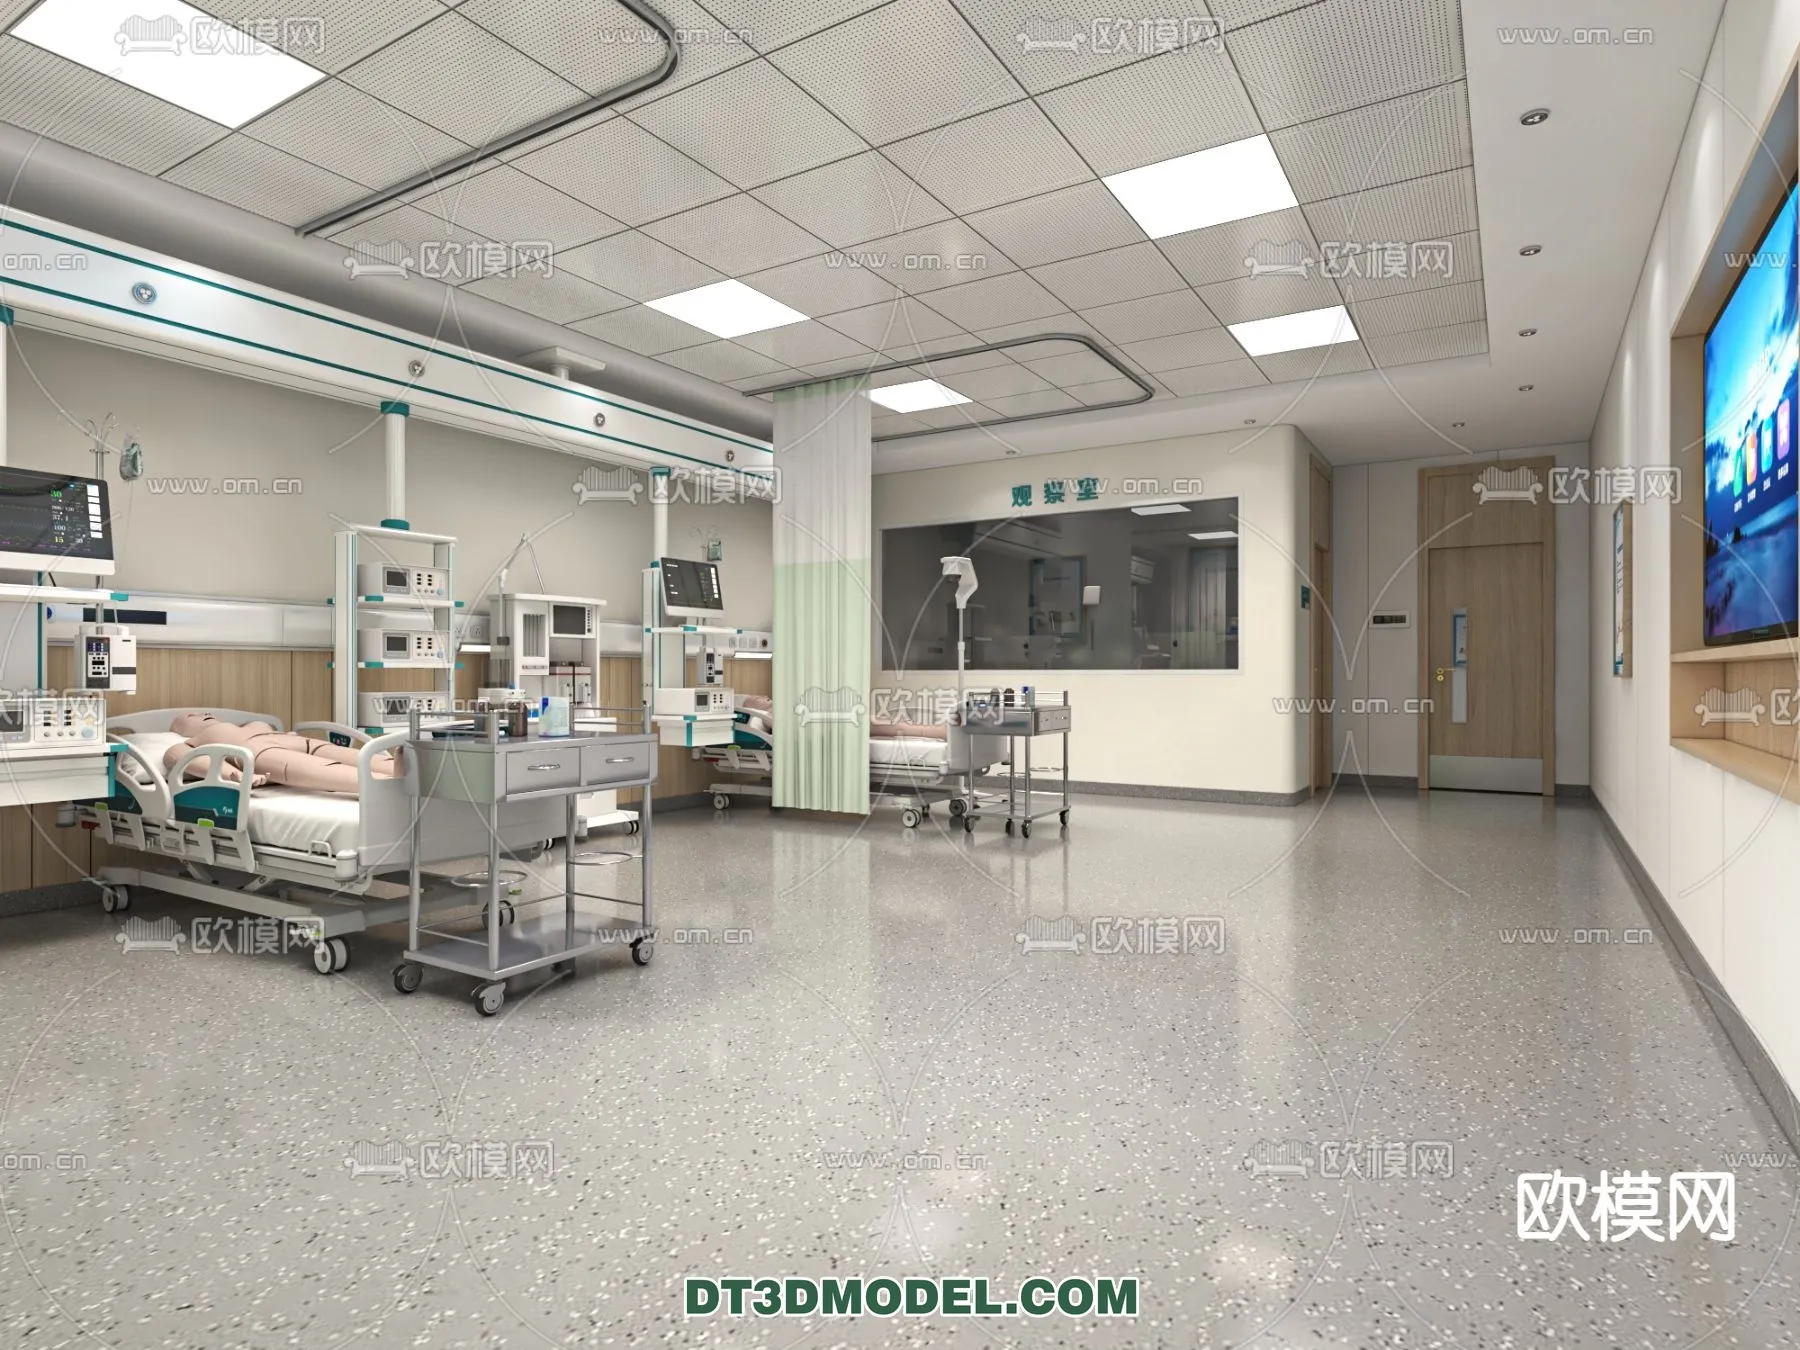 HOSPITAL 3D SCENES – MODERN – 0104